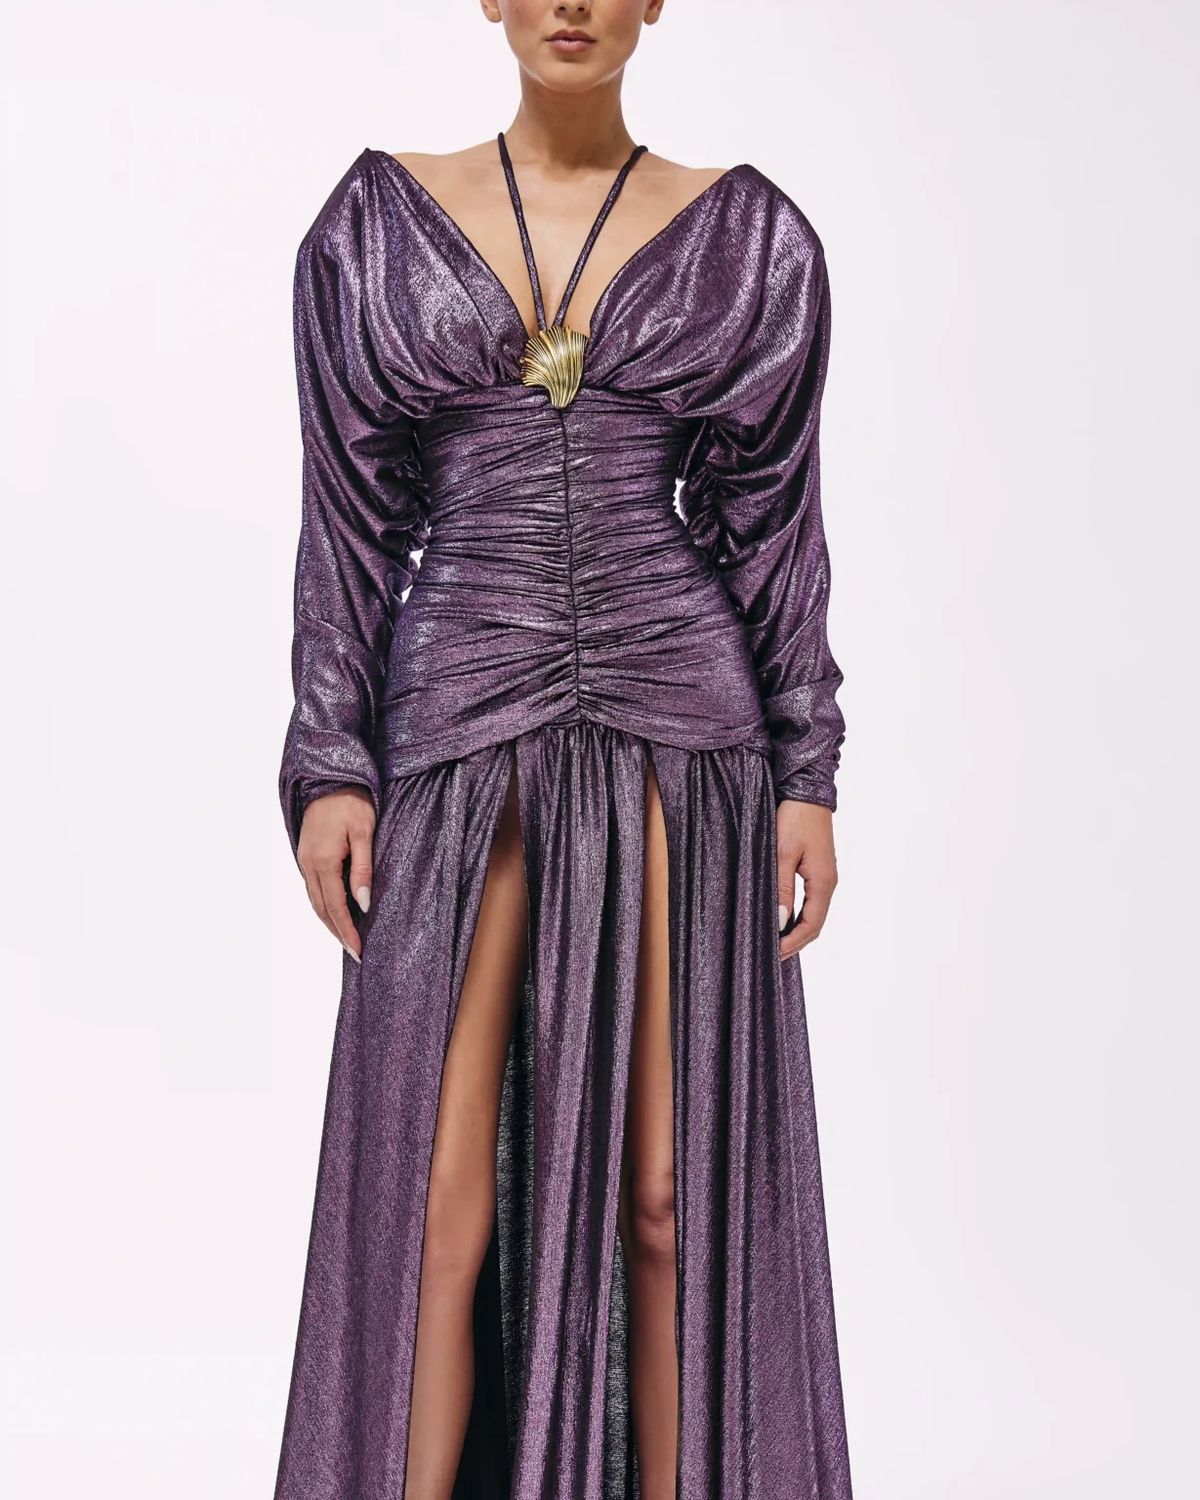 Style metallic-majesty-24-17 Valdrin Sahiti Size L Pageant Purple Side Slit Dress on Queenly